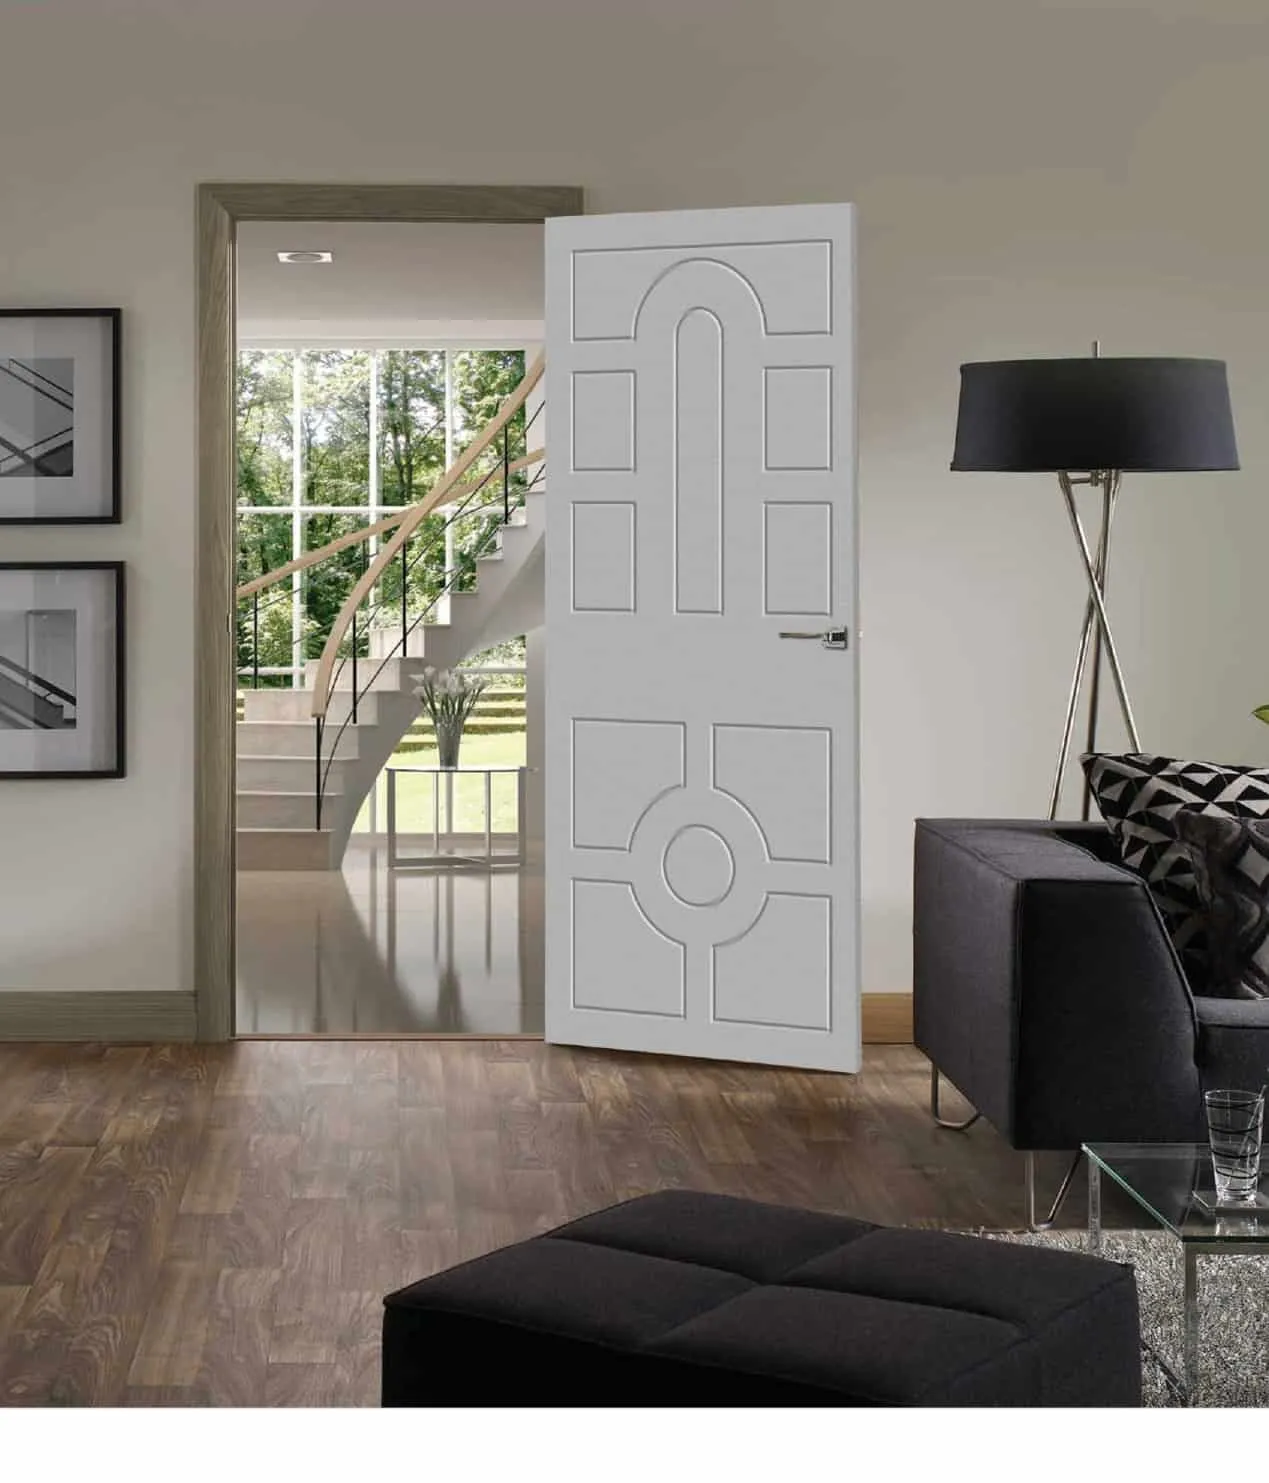 Alstone’s WPC Range Of Decorative Doors Come With Lifetime Guarantee